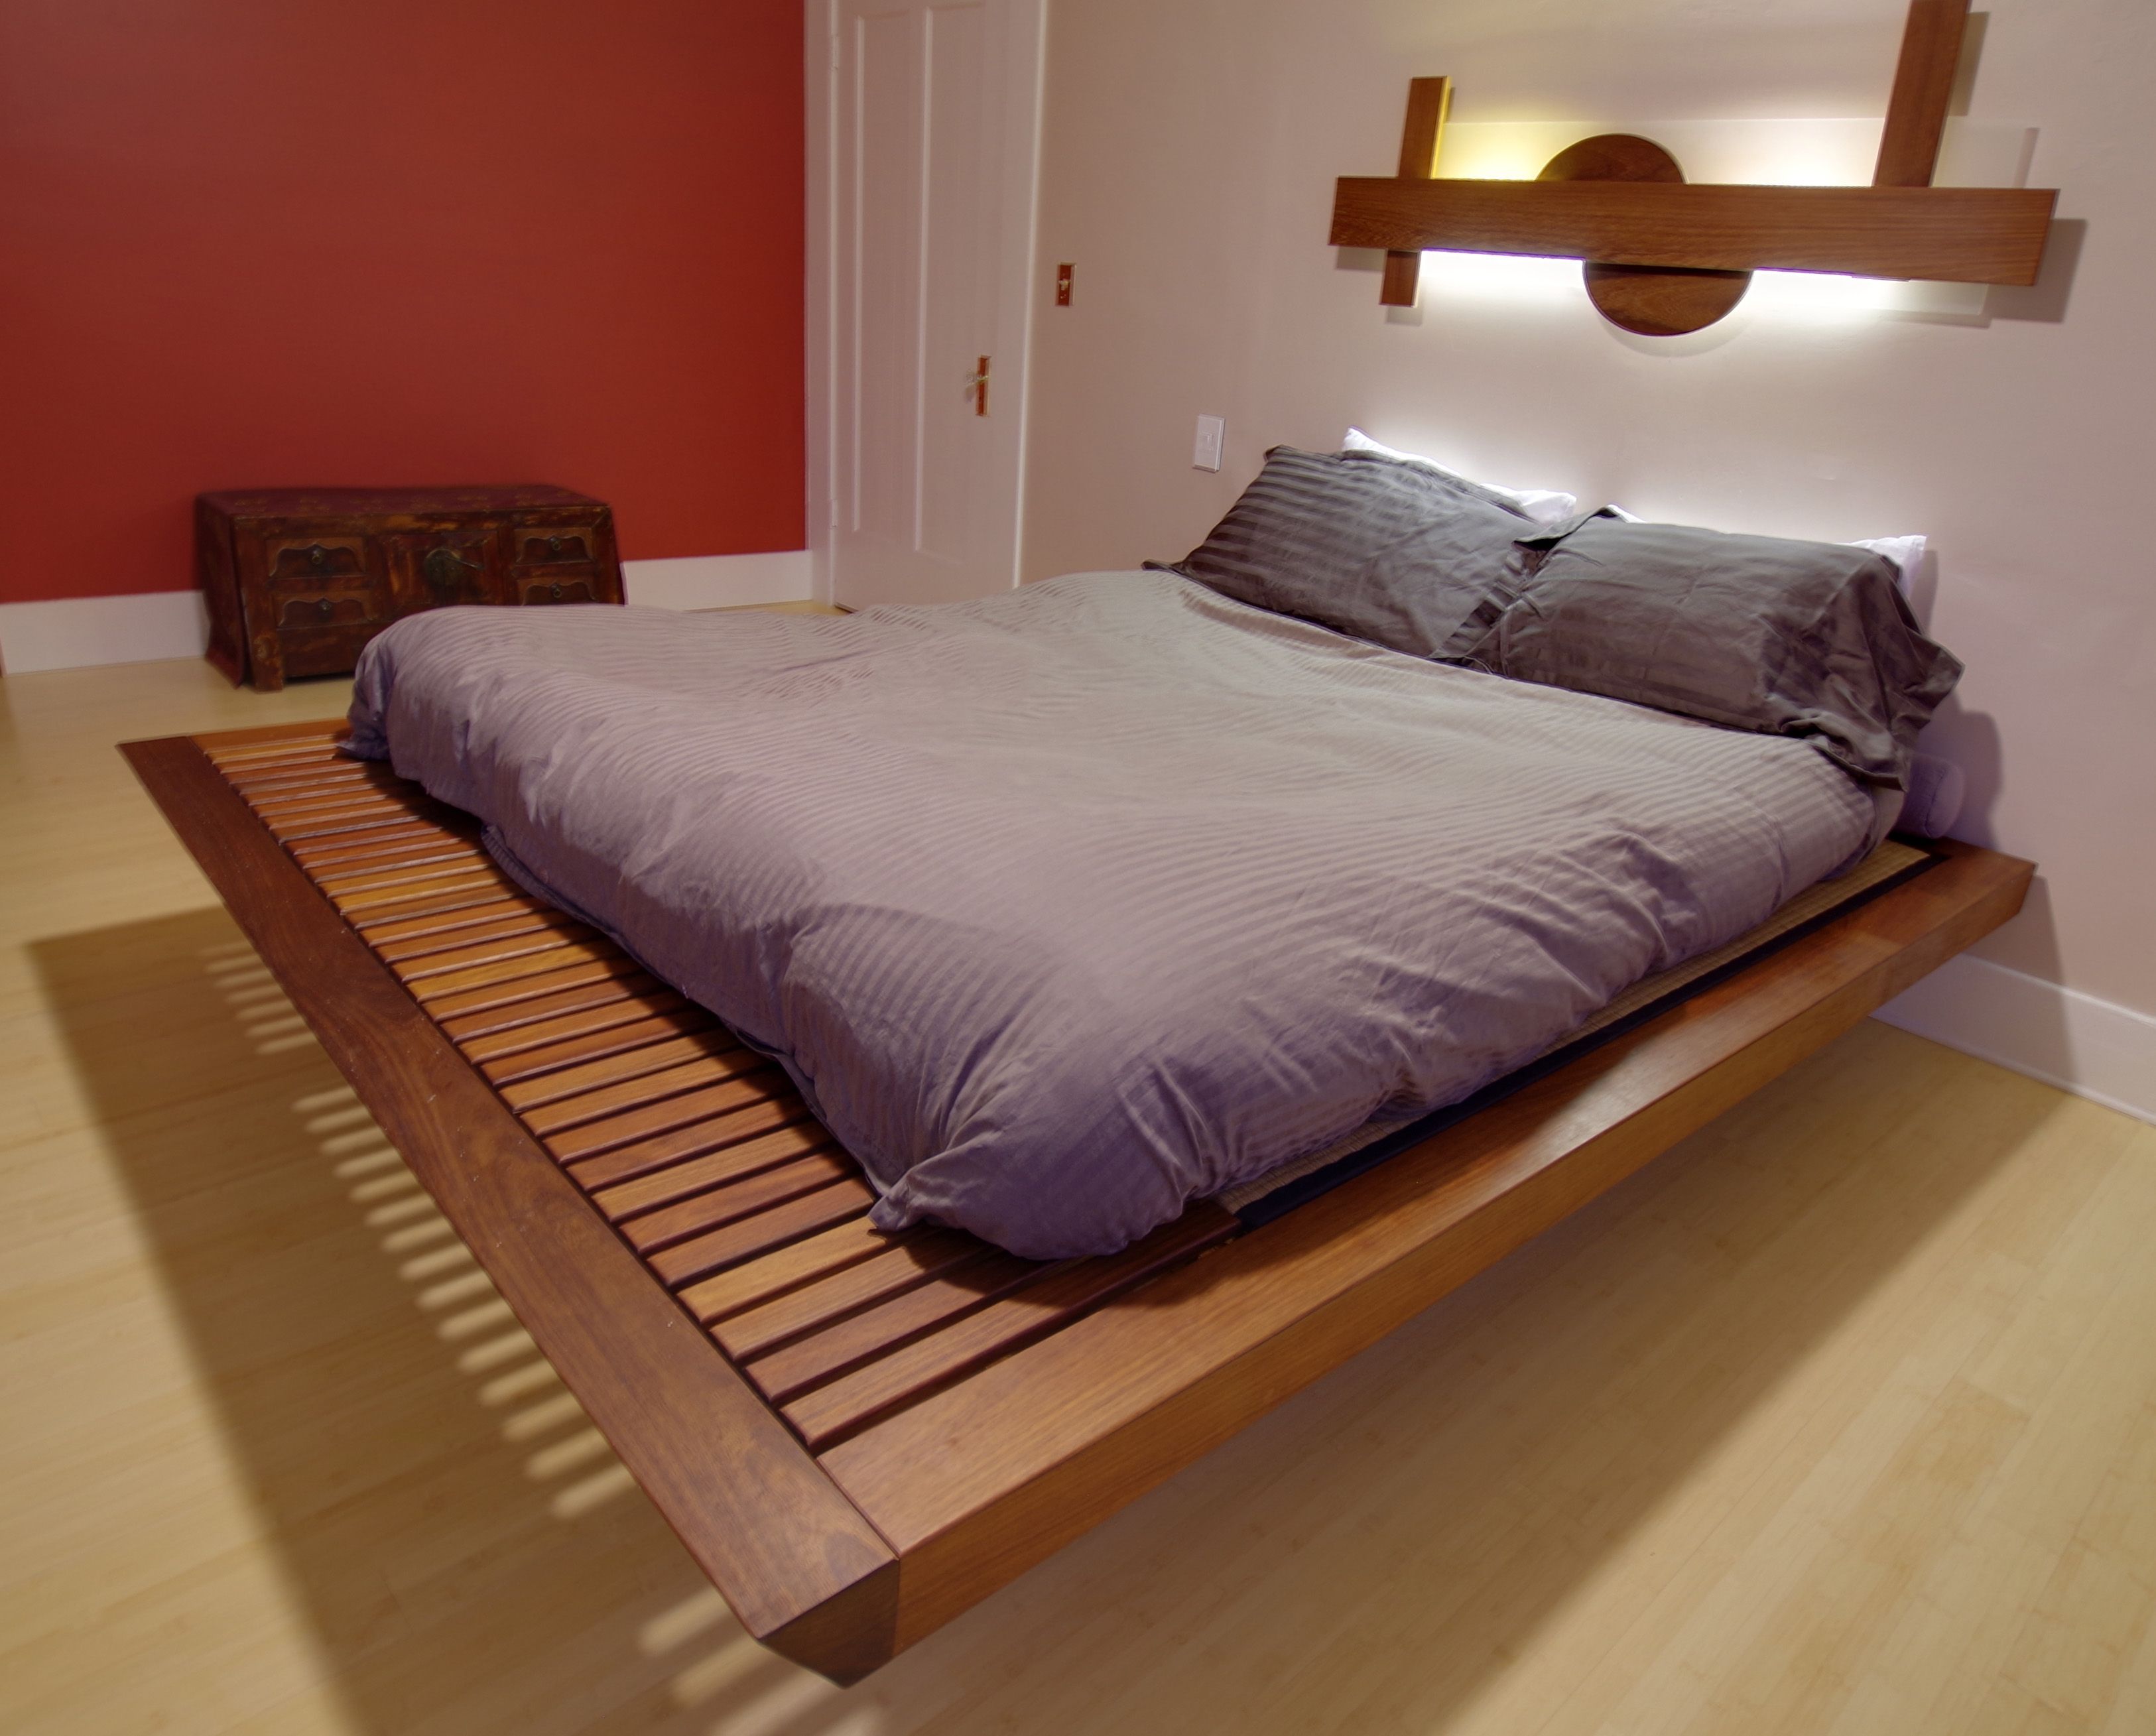 mattress for platform bed